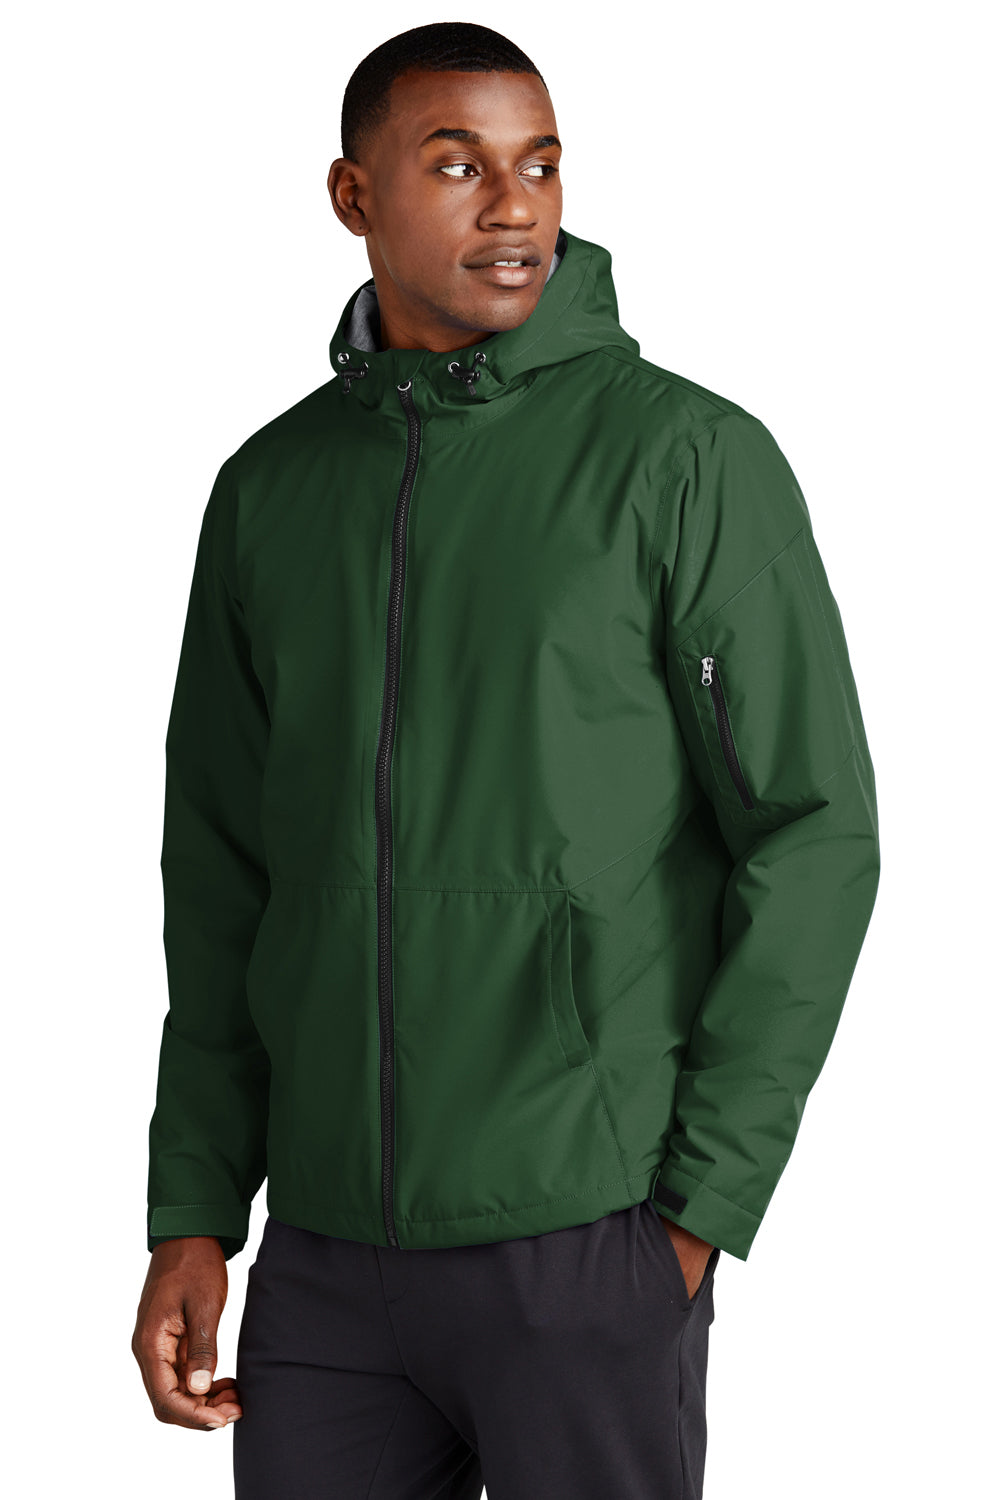 Sport-Tek JST56 Waterproof Insulated Full Zip Hooded Jacket Forest Green  3Q